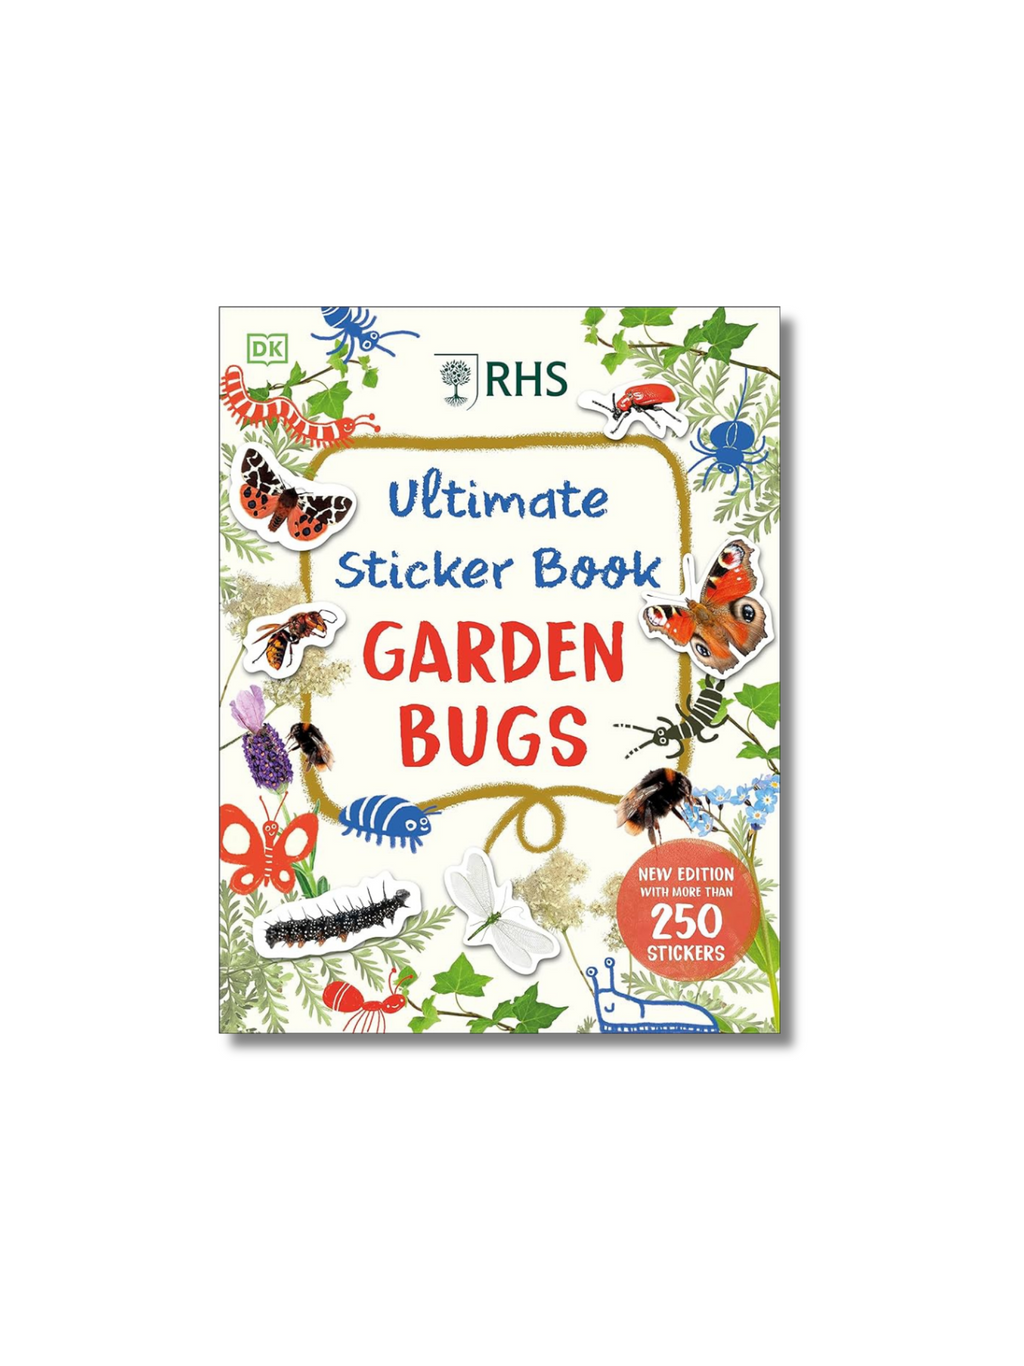 Ultimate Sticker Book Garden Bugs